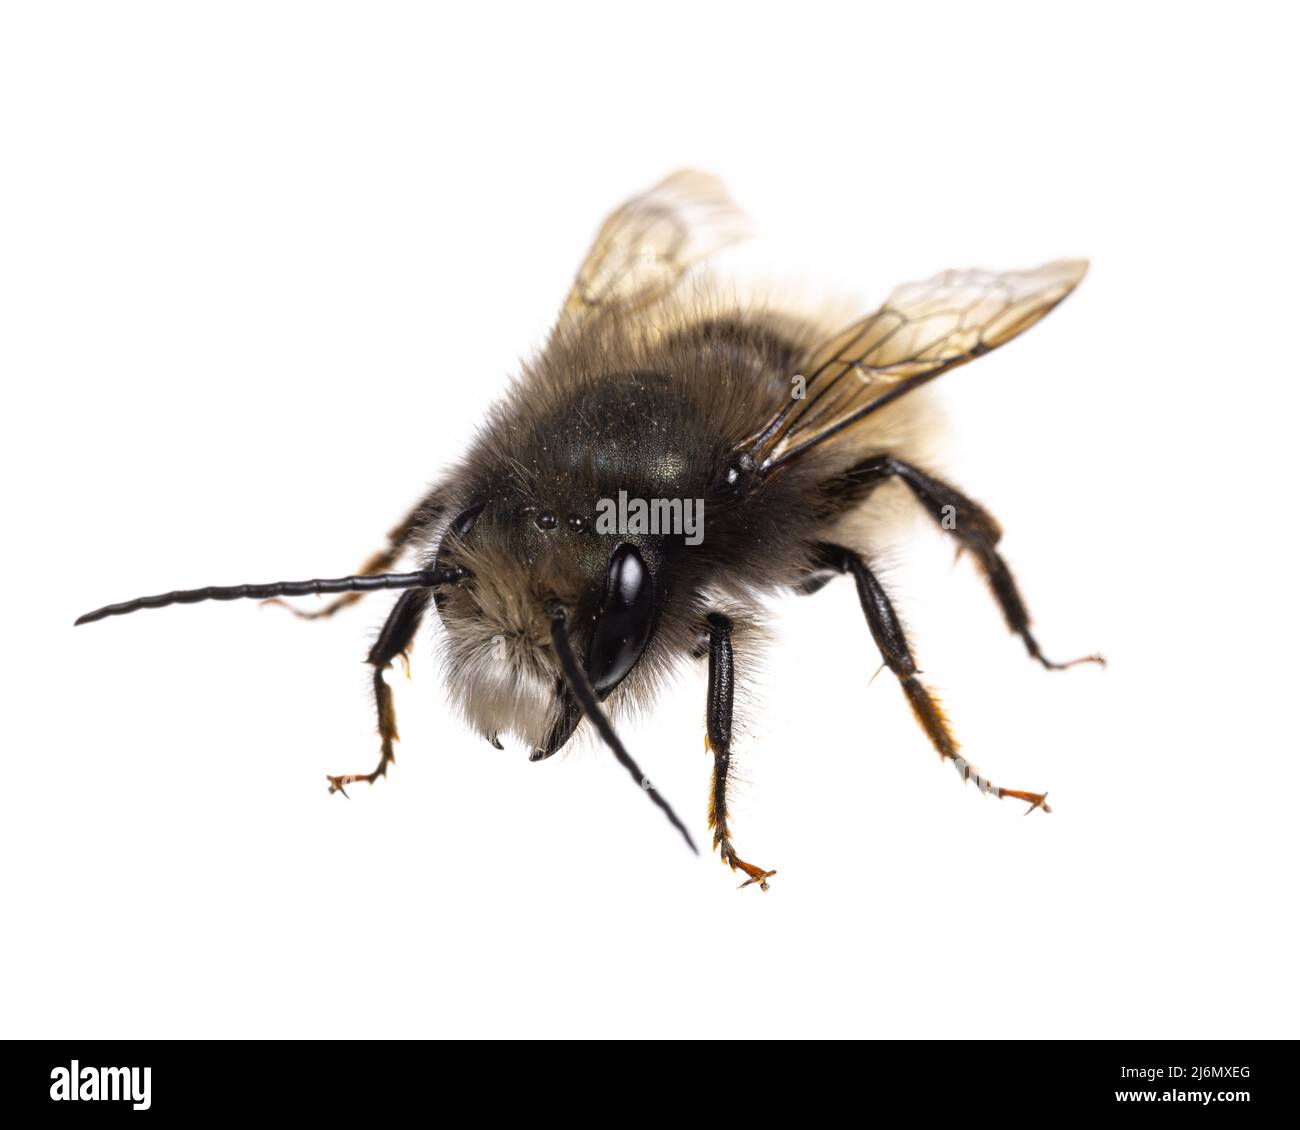 Insectos de europa - abejas: Vista diagonal de la abeja huerta europea (gehoernte Mauerbiene alemán) masculina de Osmia cornuta aislada sobre fondo blanco Foto de stock